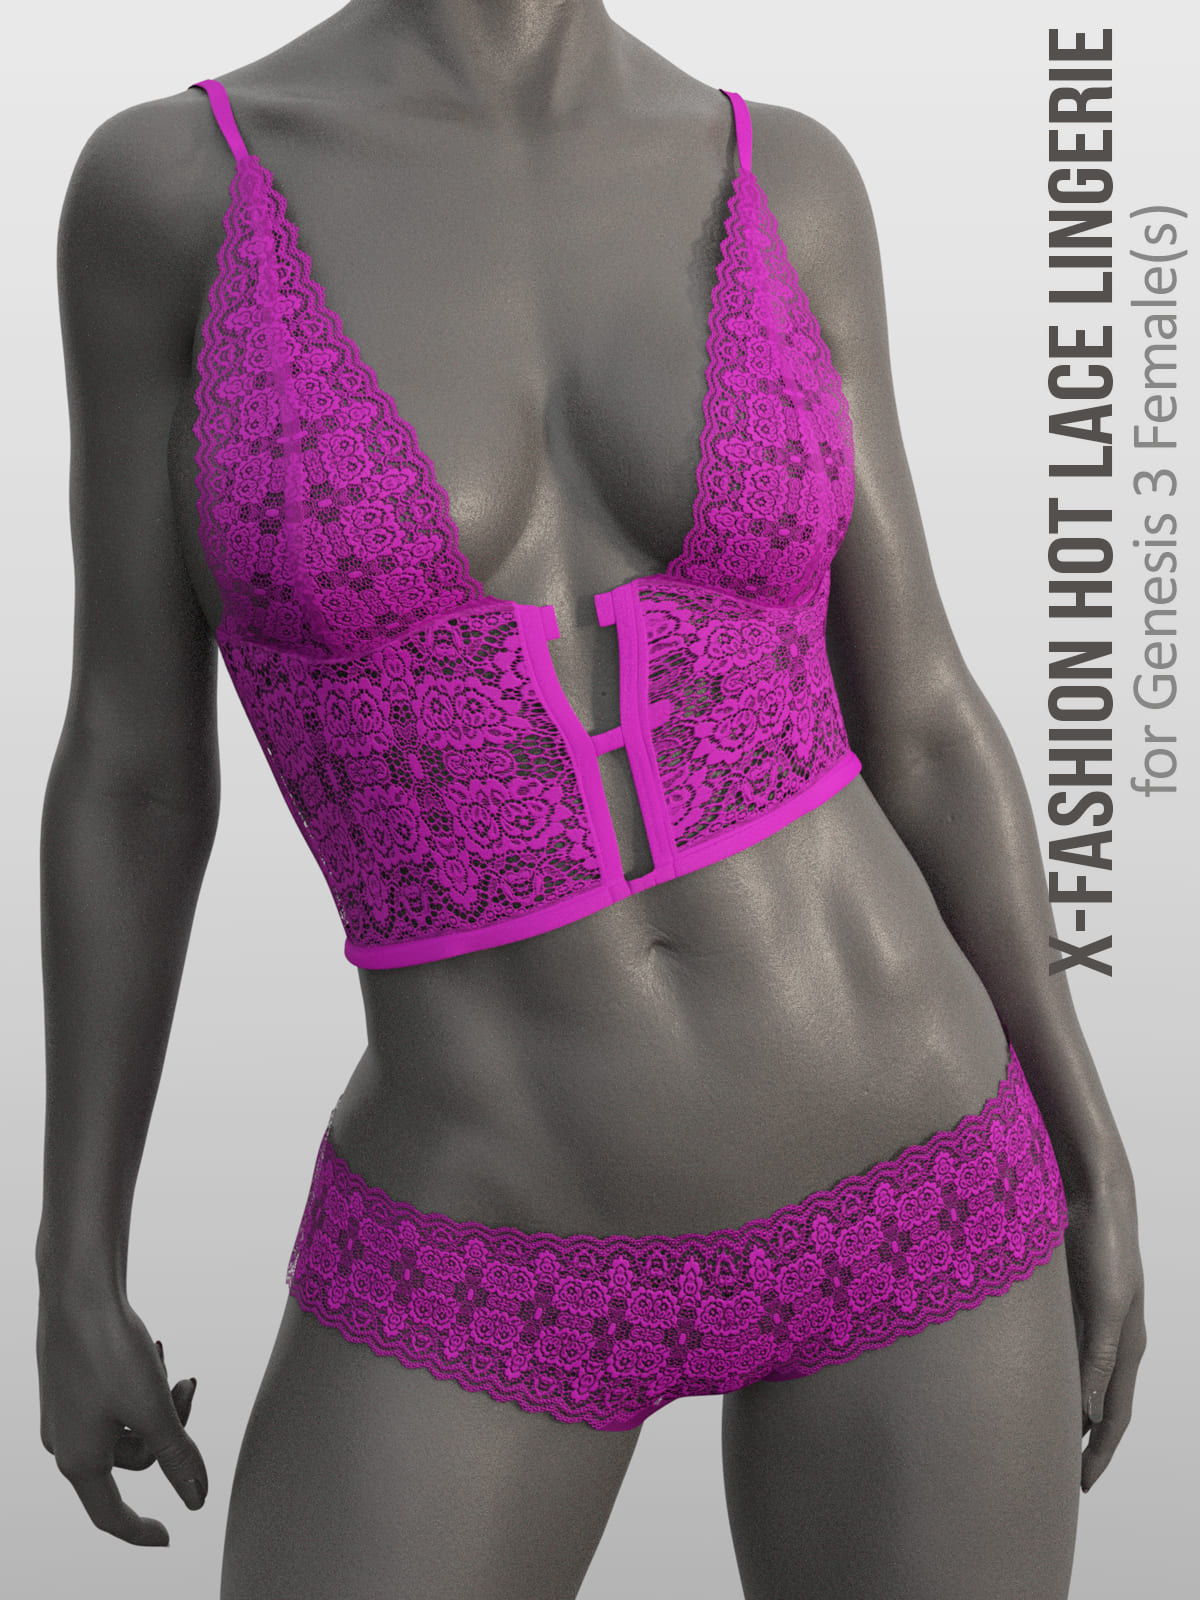 X-Fashion Hot Lace Lingerie for Genesis 8 Females_DAZ3DDL